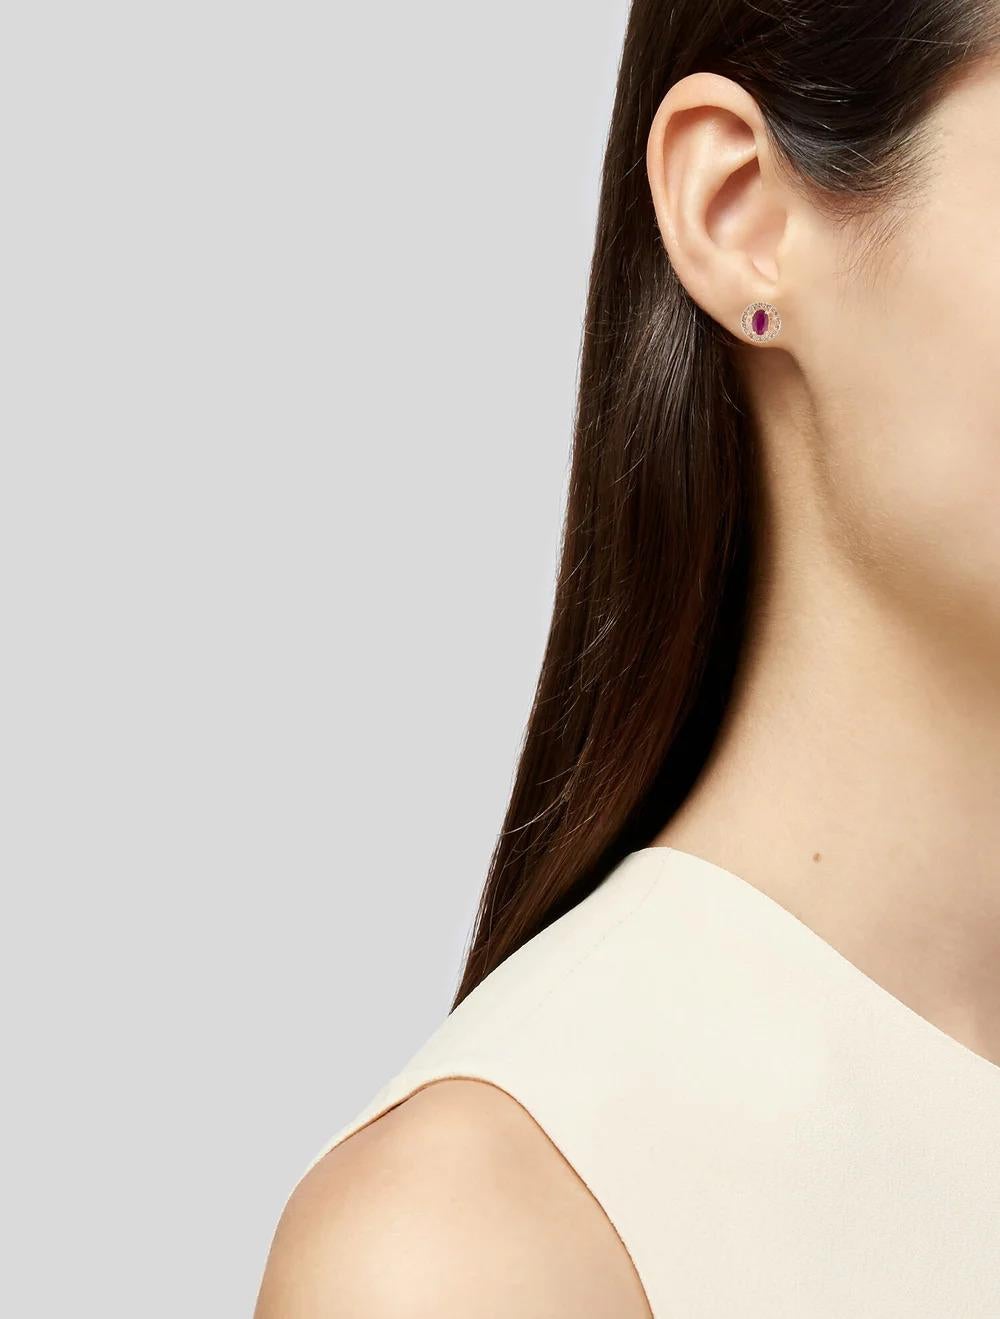 Oval Cut 14K Ruby & Diamond Stud Earrings - Timeless Elegance, Stunning Design, Luxury For Sale